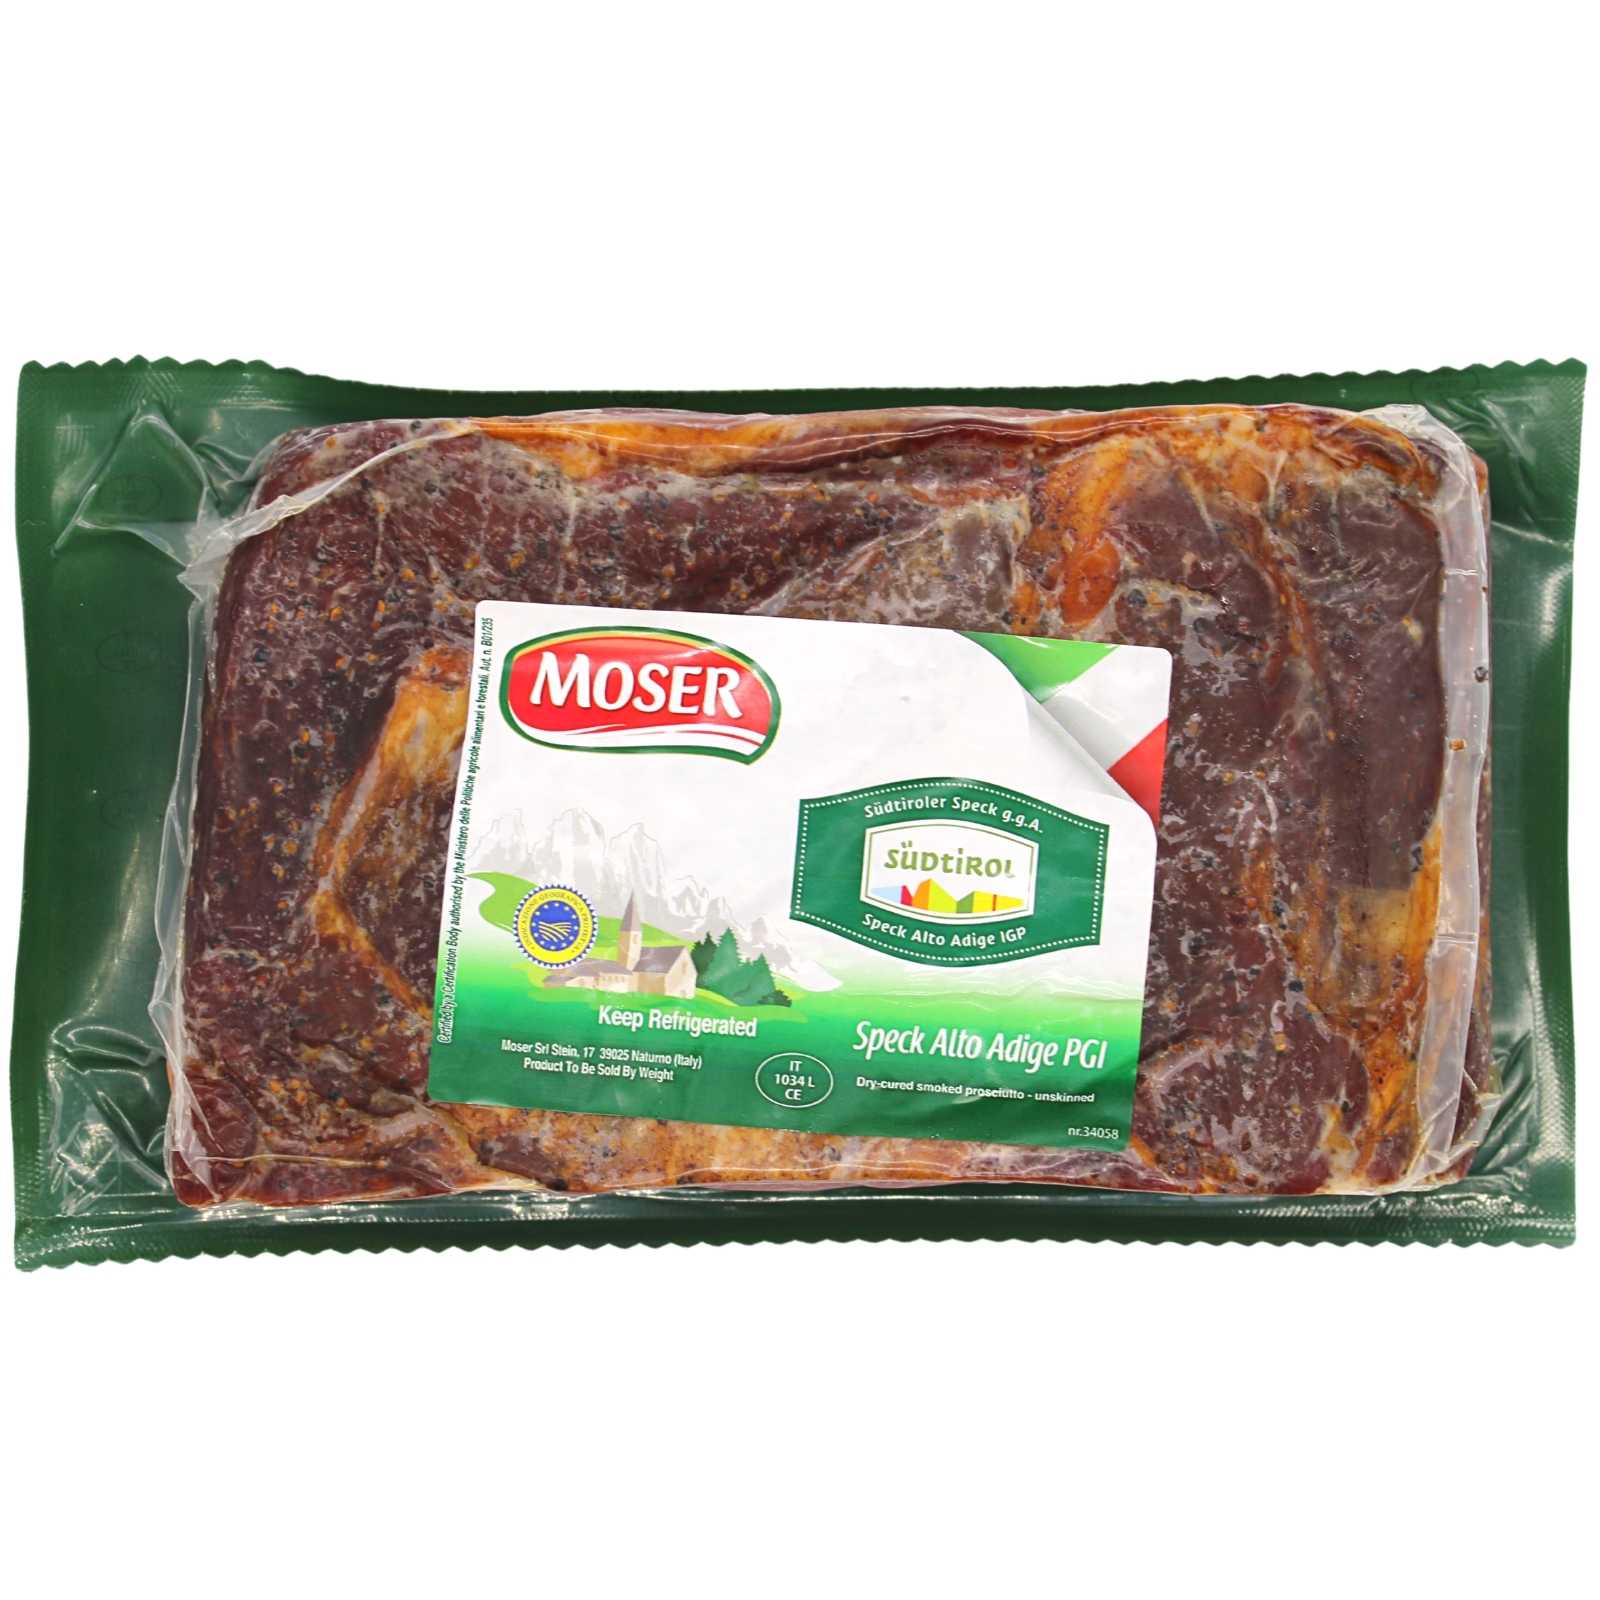 Speck Alto Weight | - PGI Prosciutto approx. – Wholesale Smoked Adige Food Italian Ham | Cured